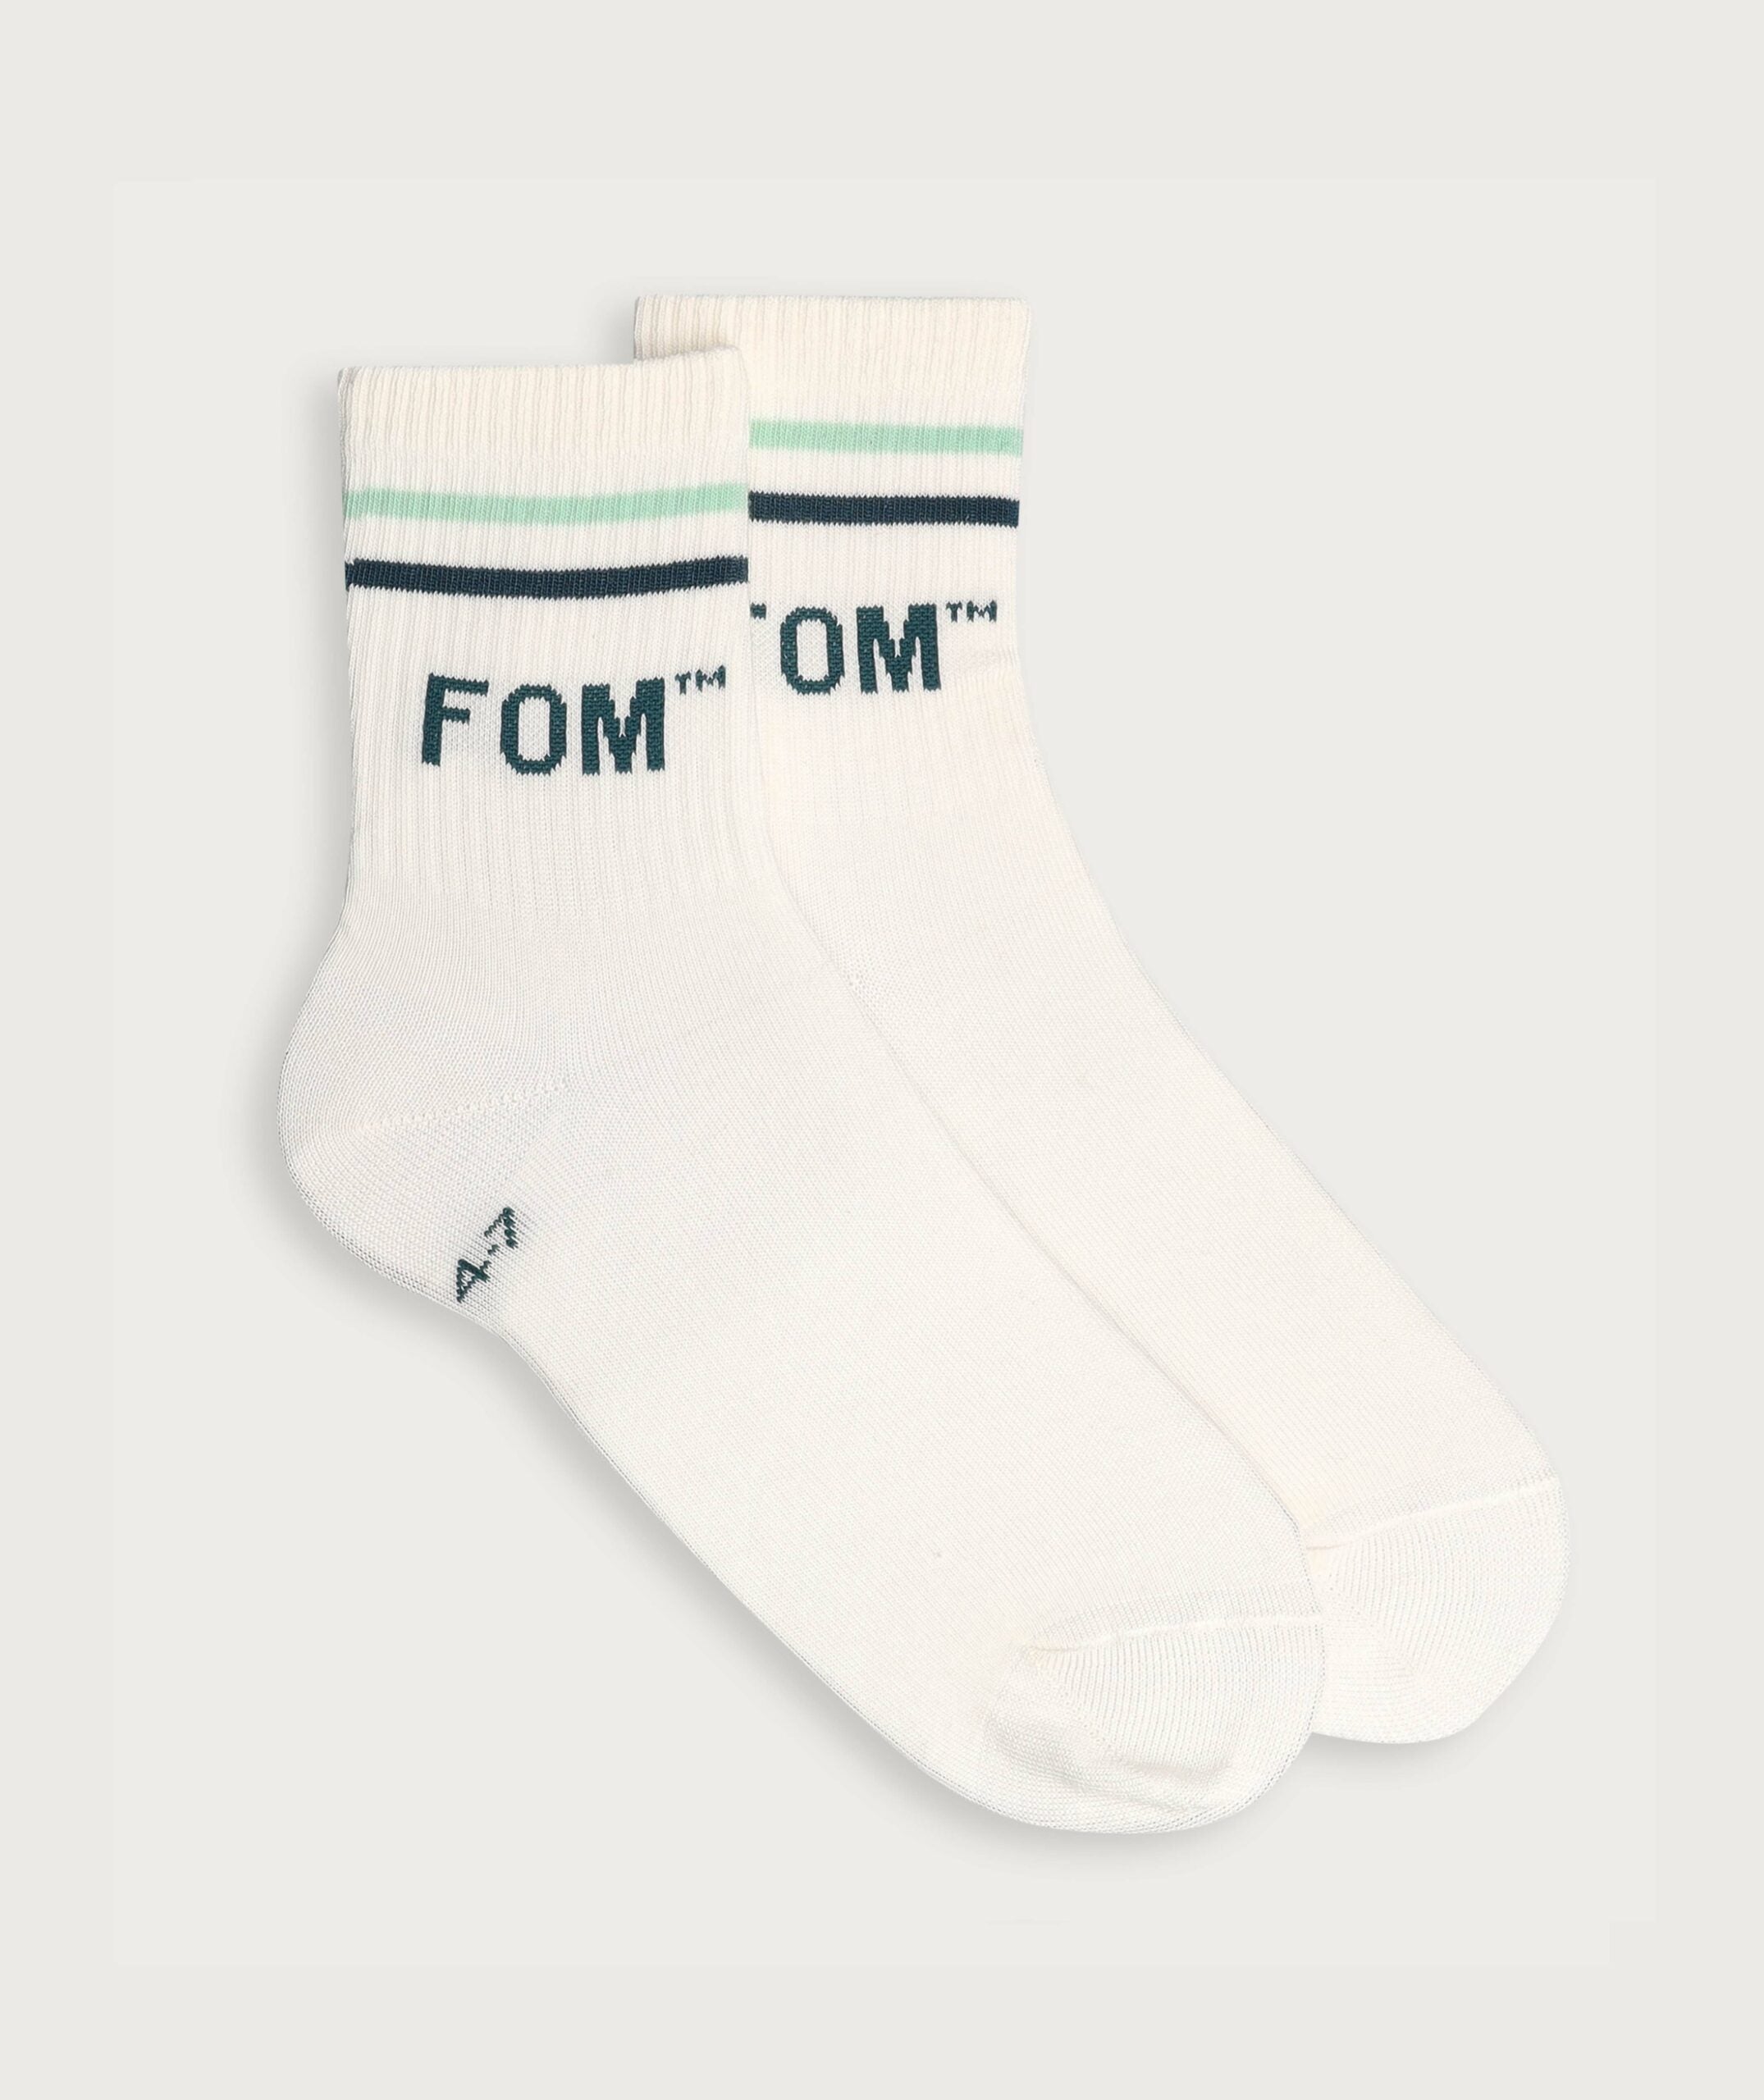 Socks FOM Active - Ivory / Mint & Teal (Size 4-7)